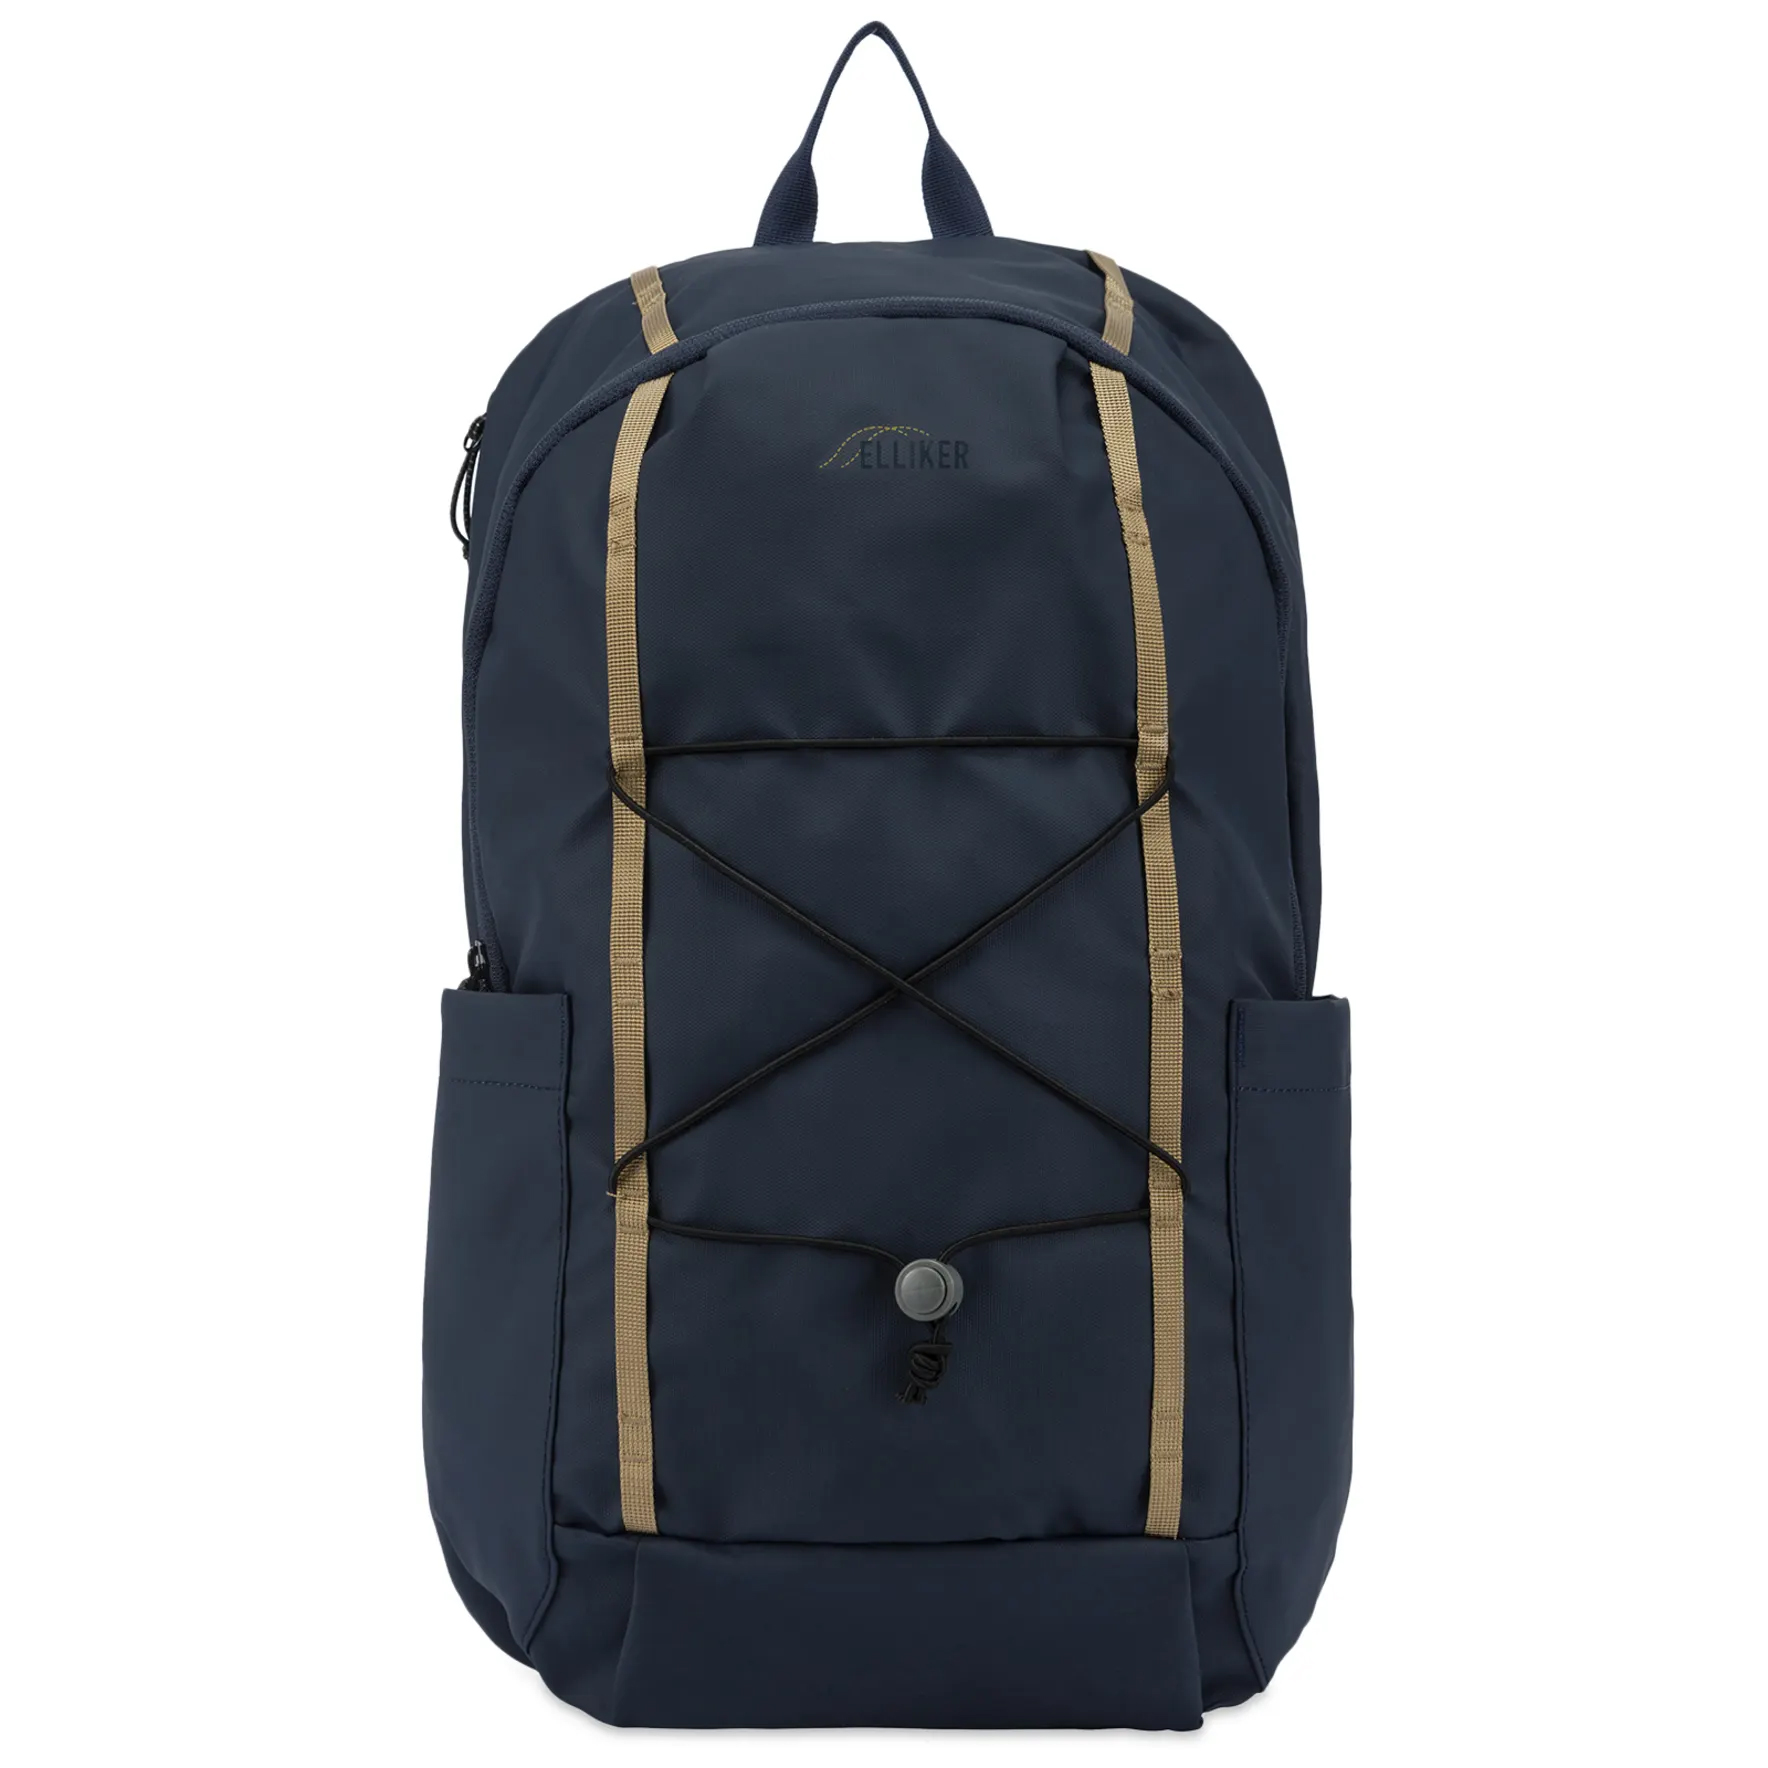 Рюкзак Elliker Keswick Zip-Top Backpack, темно-синий рюкзак elliker dayle navy